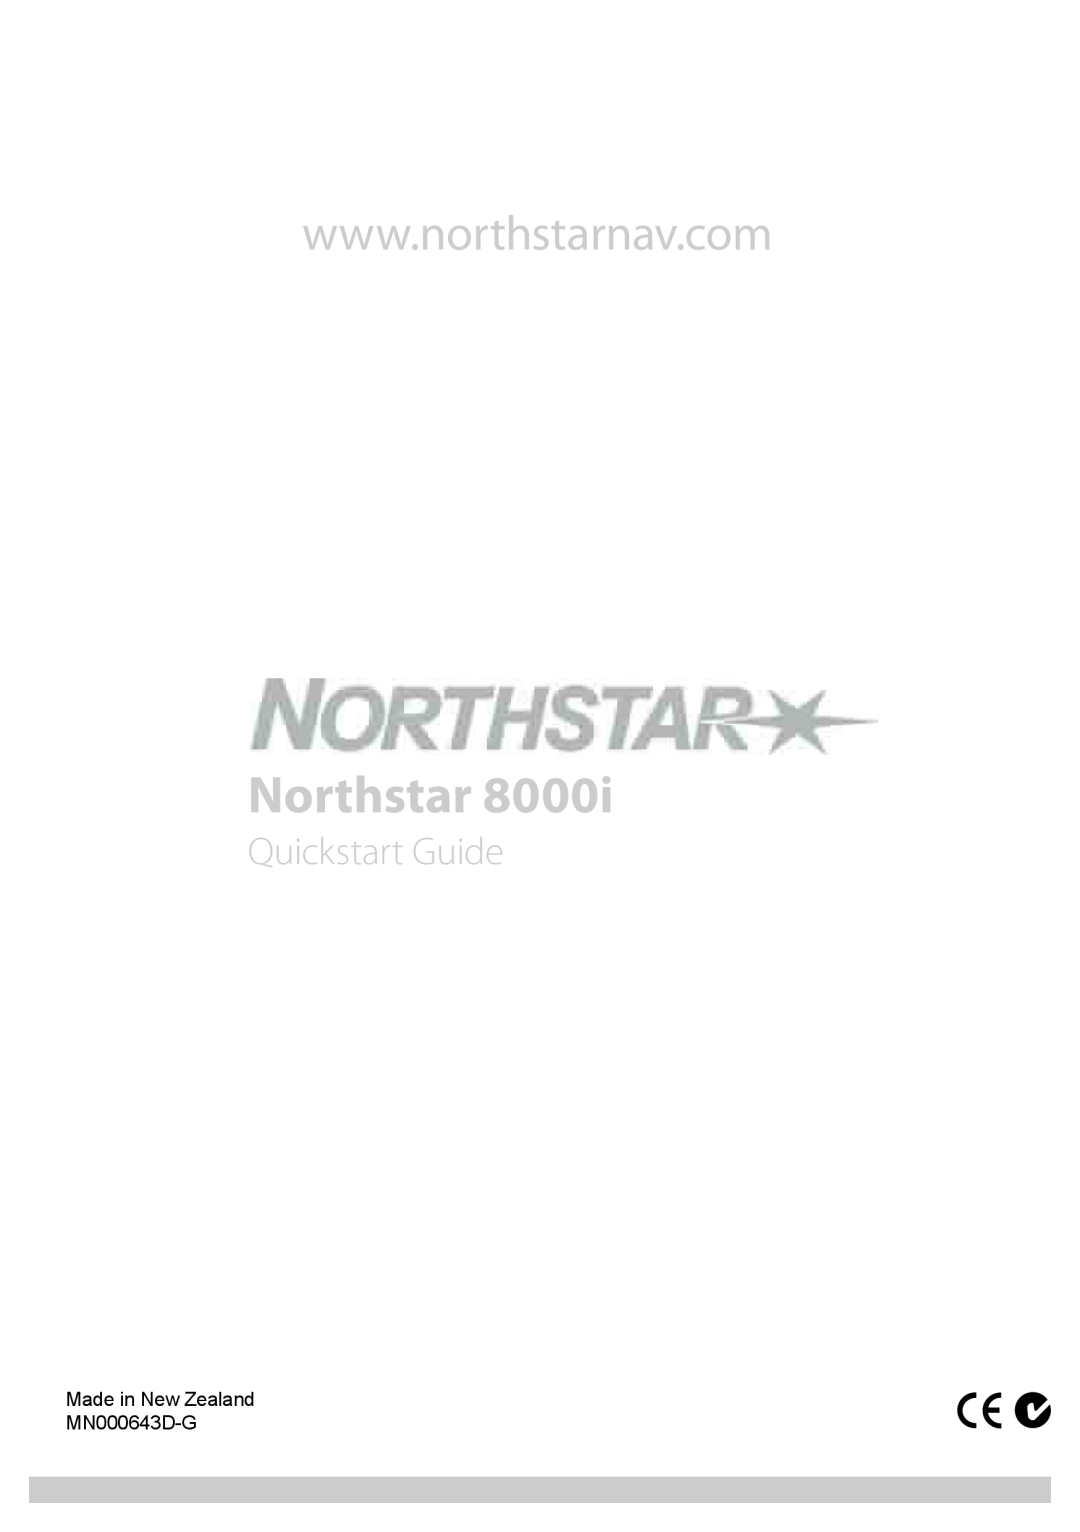 NorthStar Navigation 8000I quick start Northstar, Quickstart Guide, Made in New Zealand MN000643D-G 